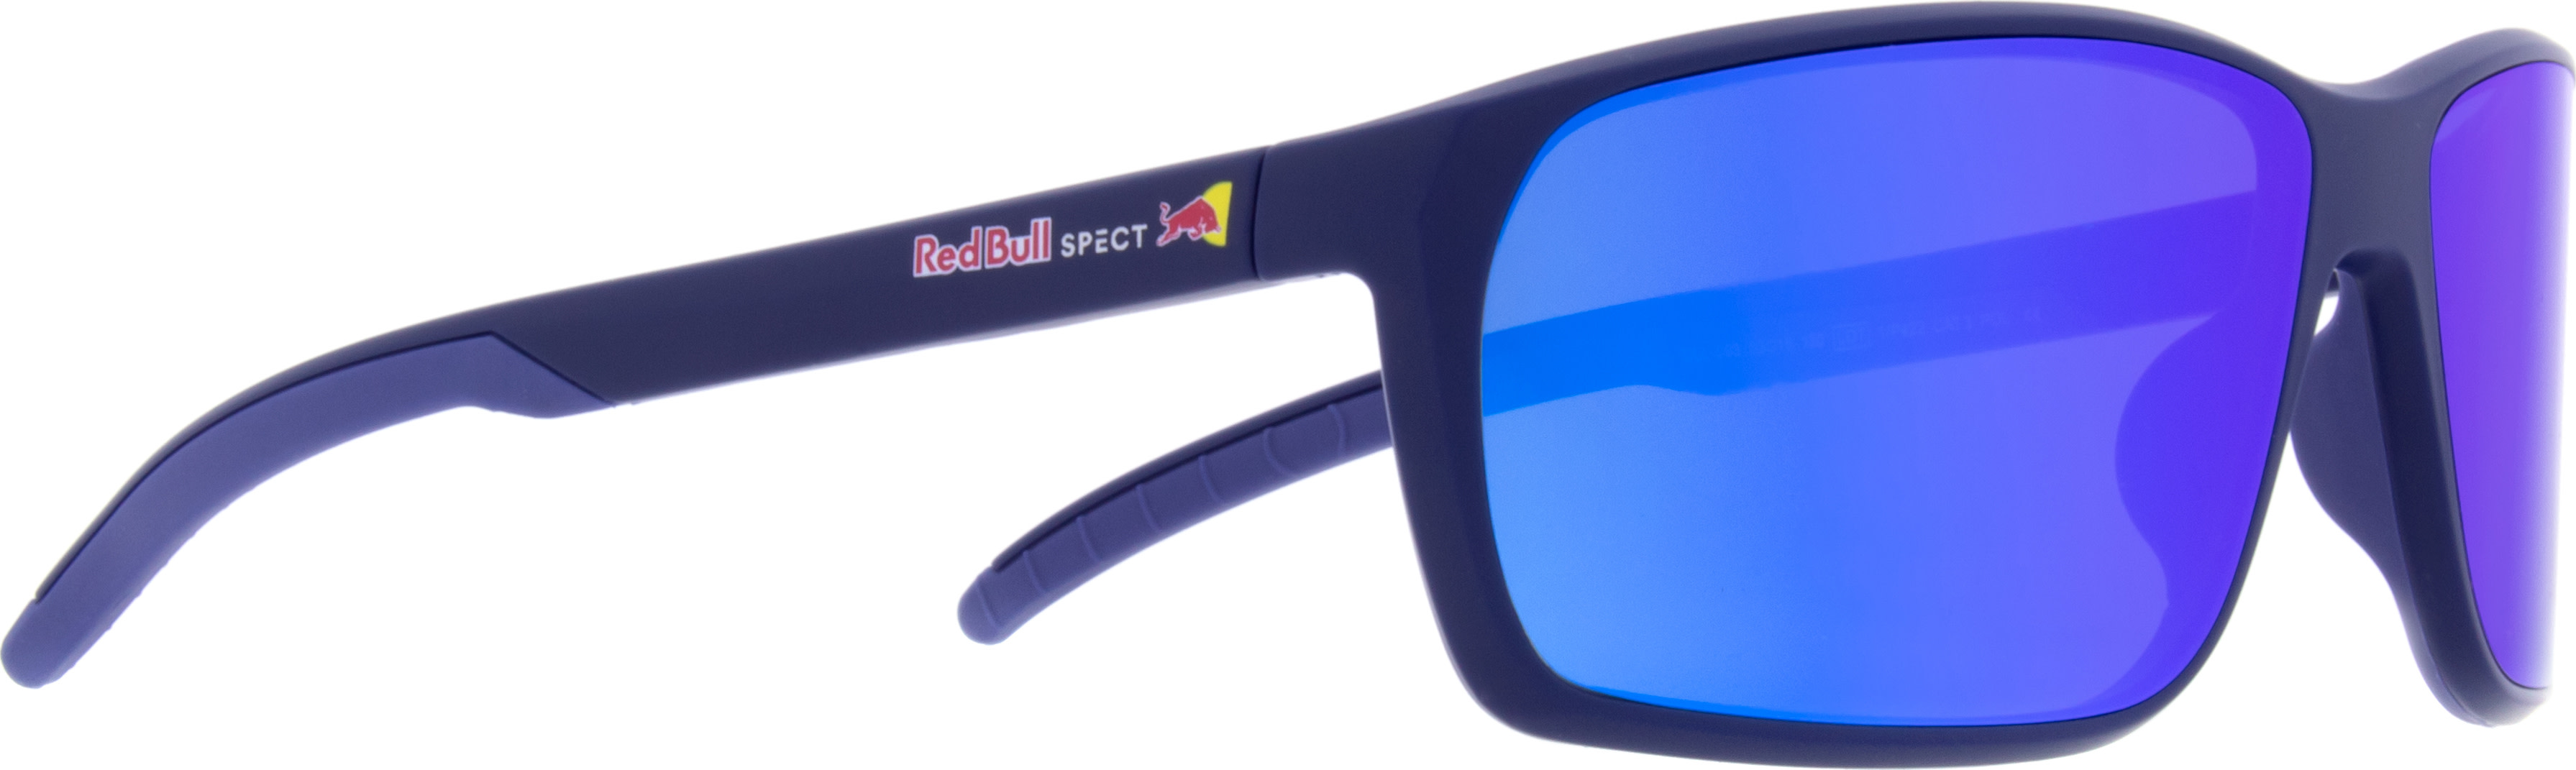 Red Bull SPECT Till Blue OneSize, Blue/Smoke Blue Mirror